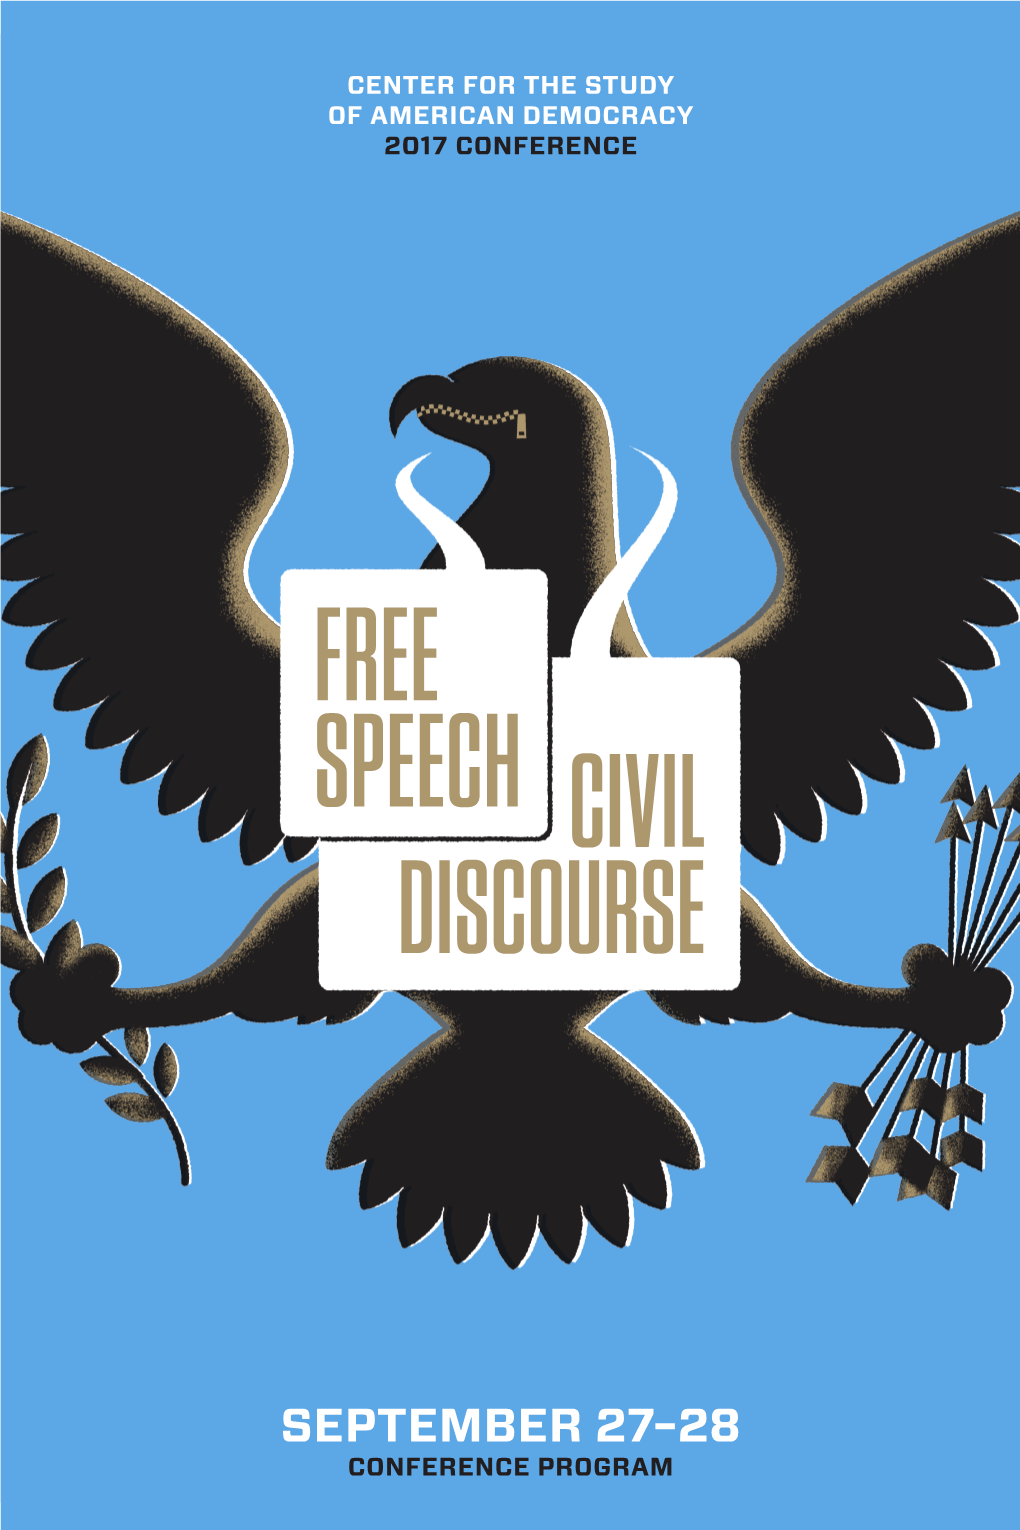 Free Speech and Civil Discourse